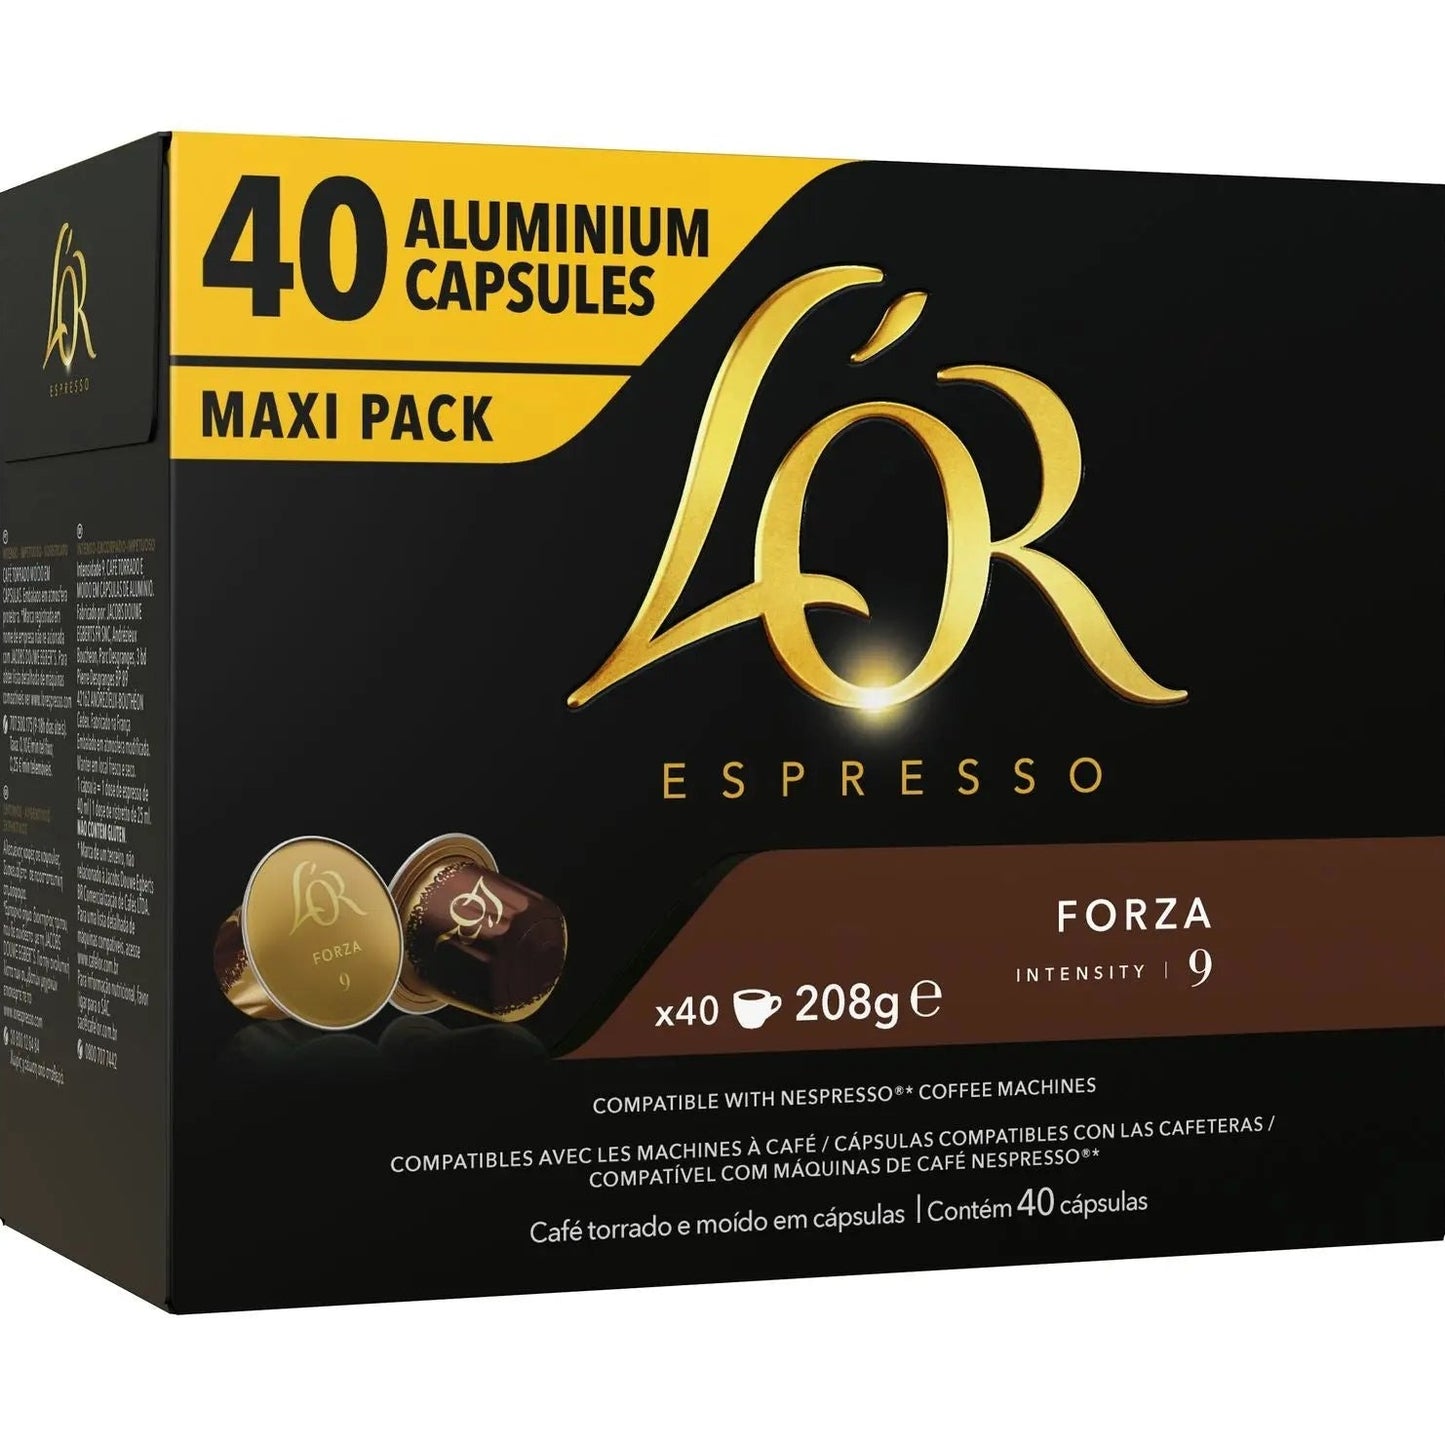 Publicité Advertising 127 2012 café Nespresso L'Or capsules Forza